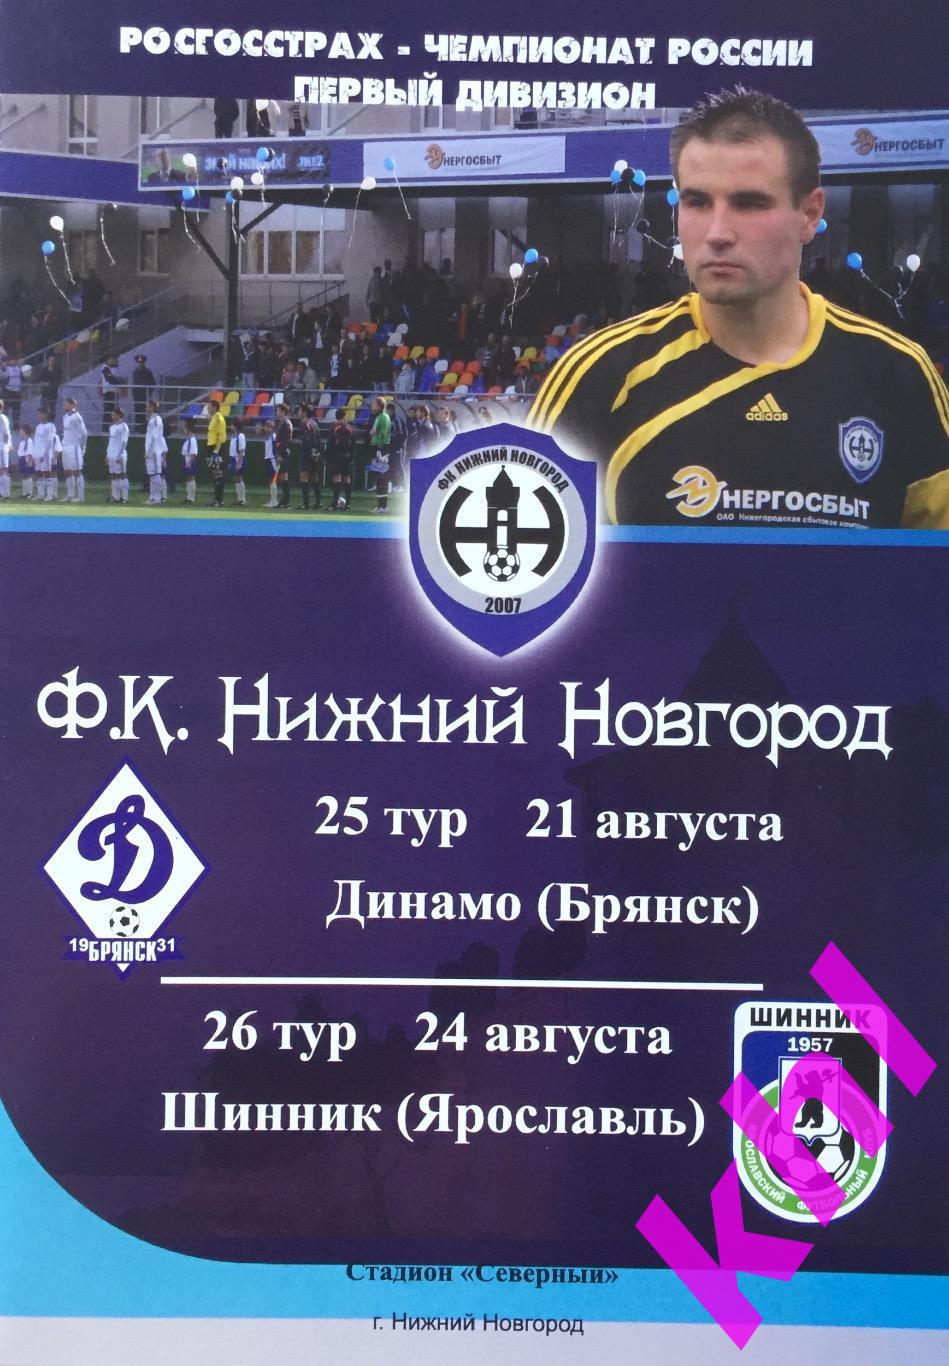 ФК Нижний Новгород - Шинник Ярославль / Динамо Брянск 2010